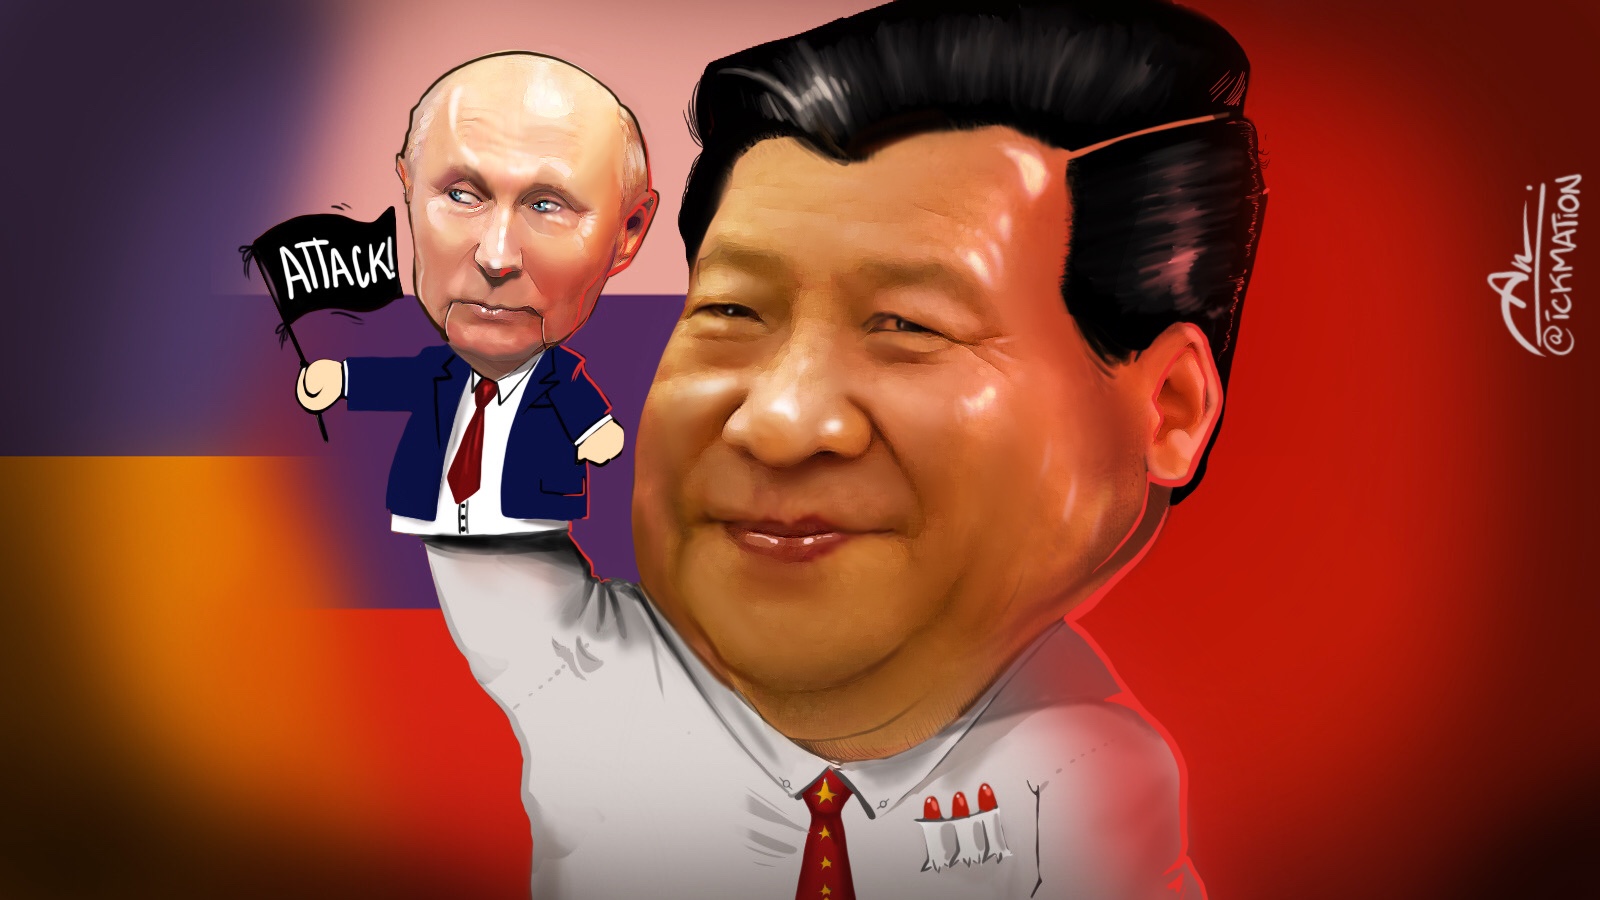 Vladimir Putin y Xi Jinping, títere y titiritero (Rodrigo AcevedoInfobae)